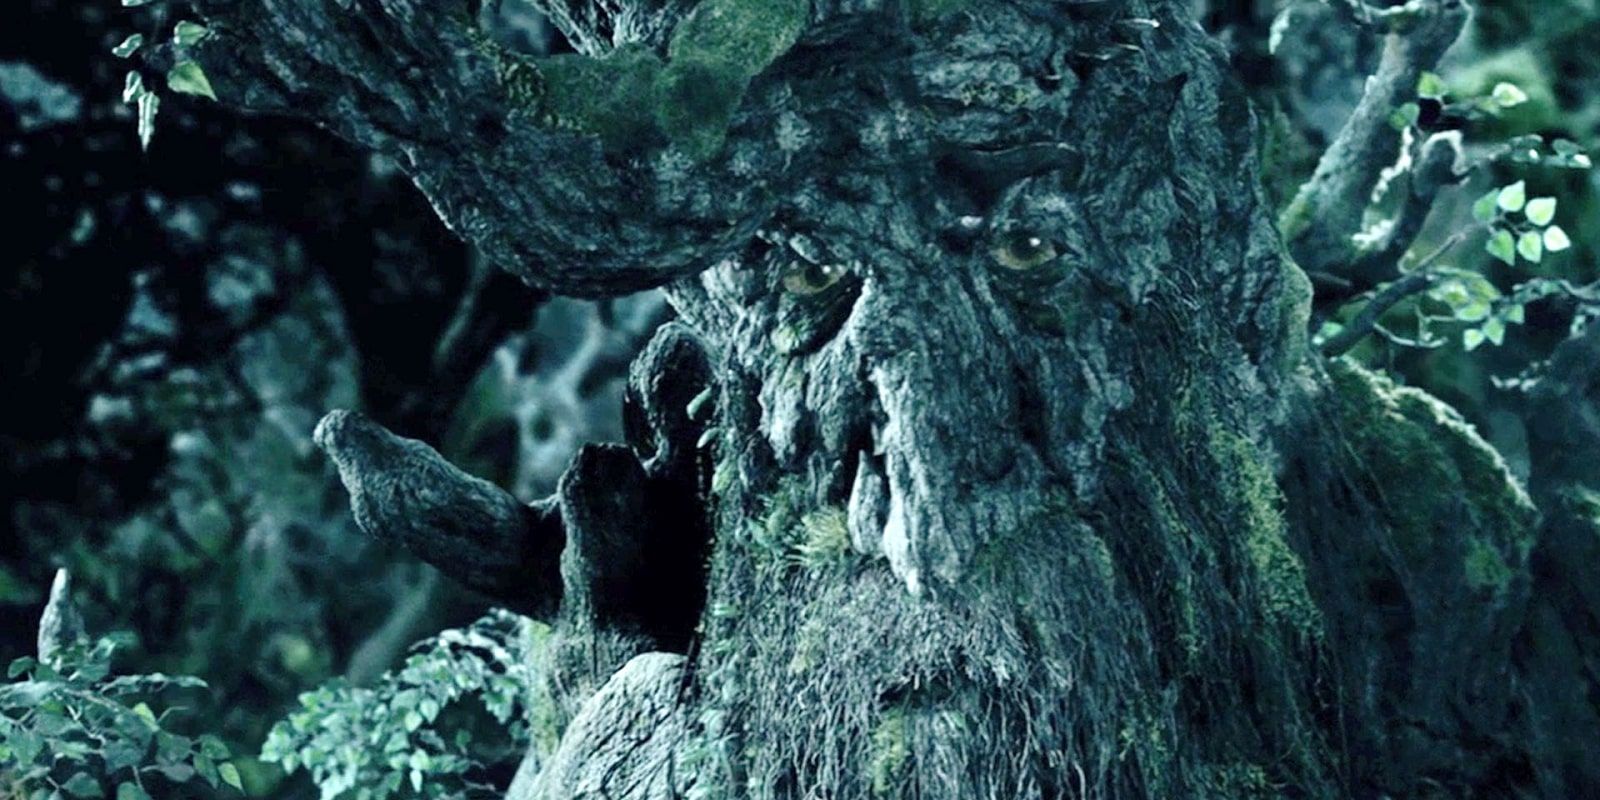 Treebeard for the entry Is Tom Bombadil Older Than Treebeard